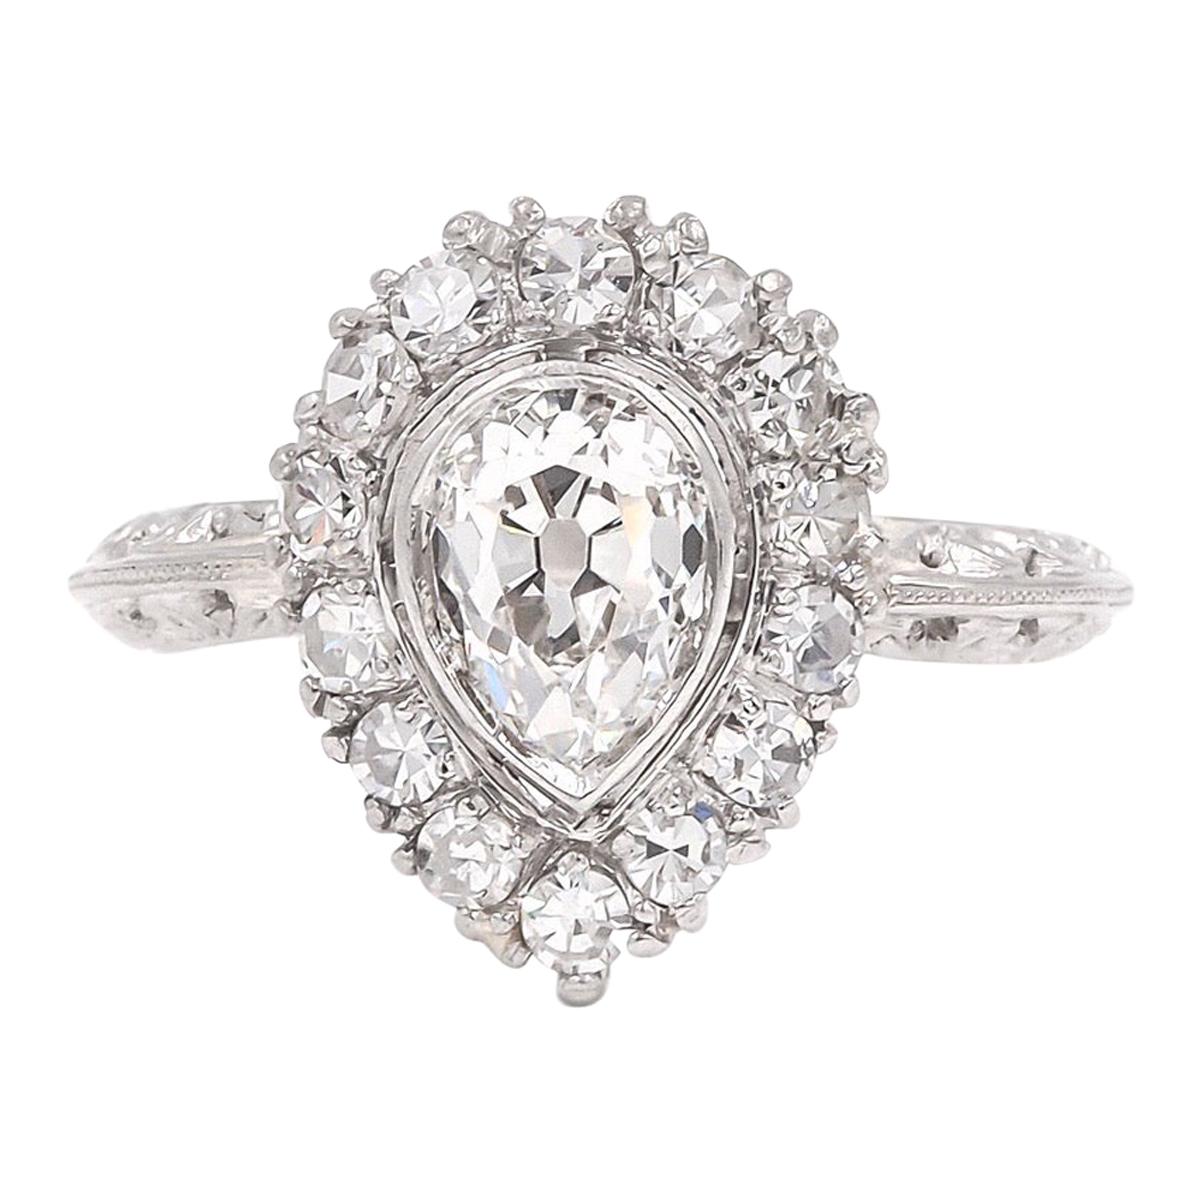 Edwardian GIA Certified 1.10 Carat Antique Pear Shape Diamond Cluster Ring